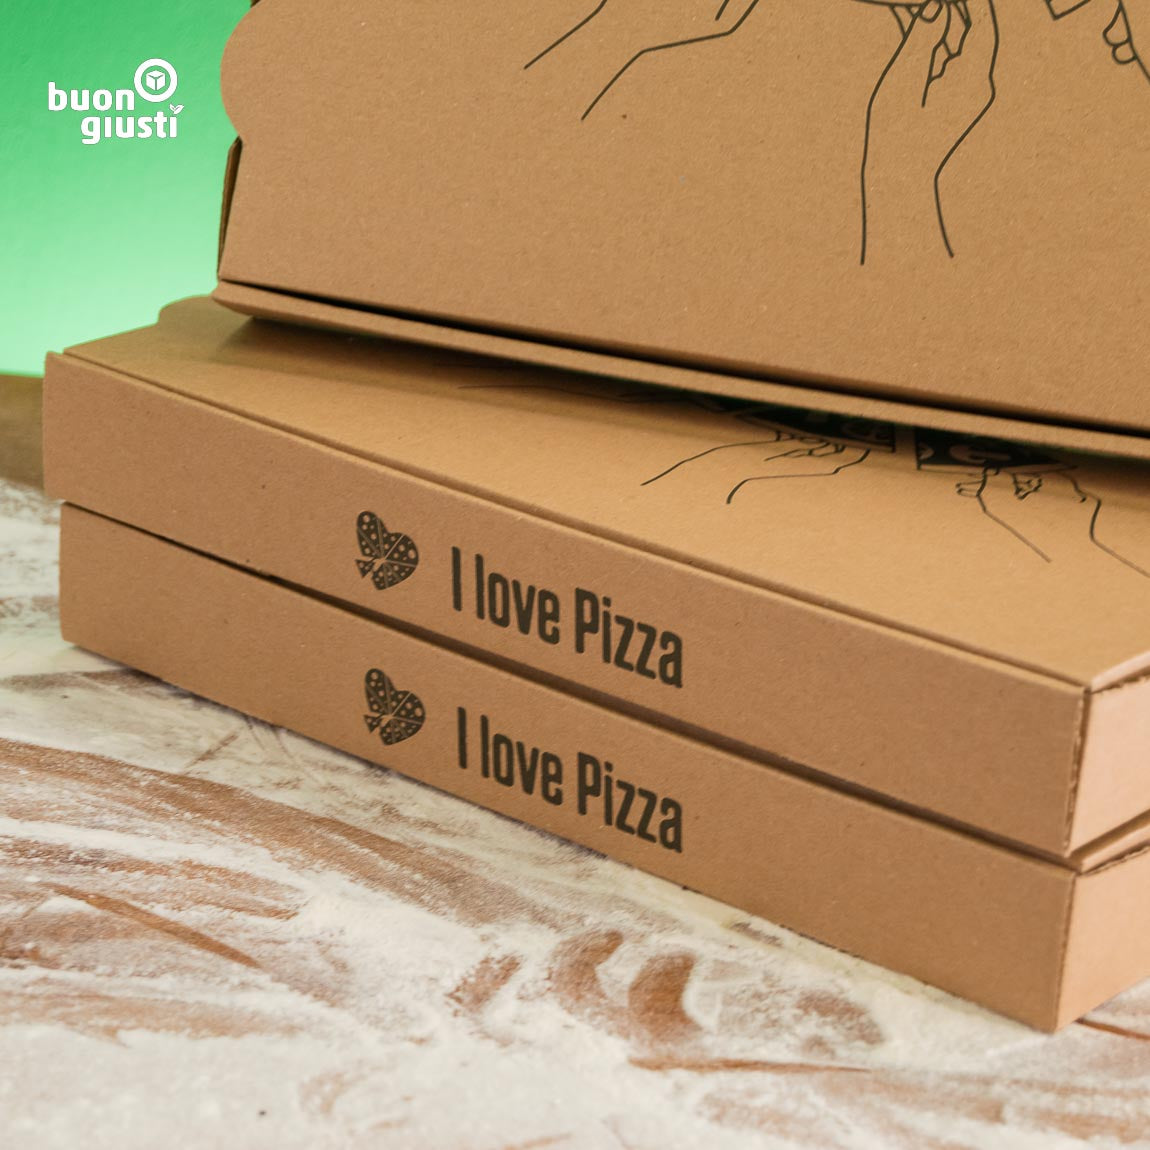 200 Stk. | 32x32x4 cm Pizzakarton Doppel-Kraft "I LOVE PIZZA" Motivdruck - Pizzakarton - buongiusti AG - personalisiert ab 100 Stück